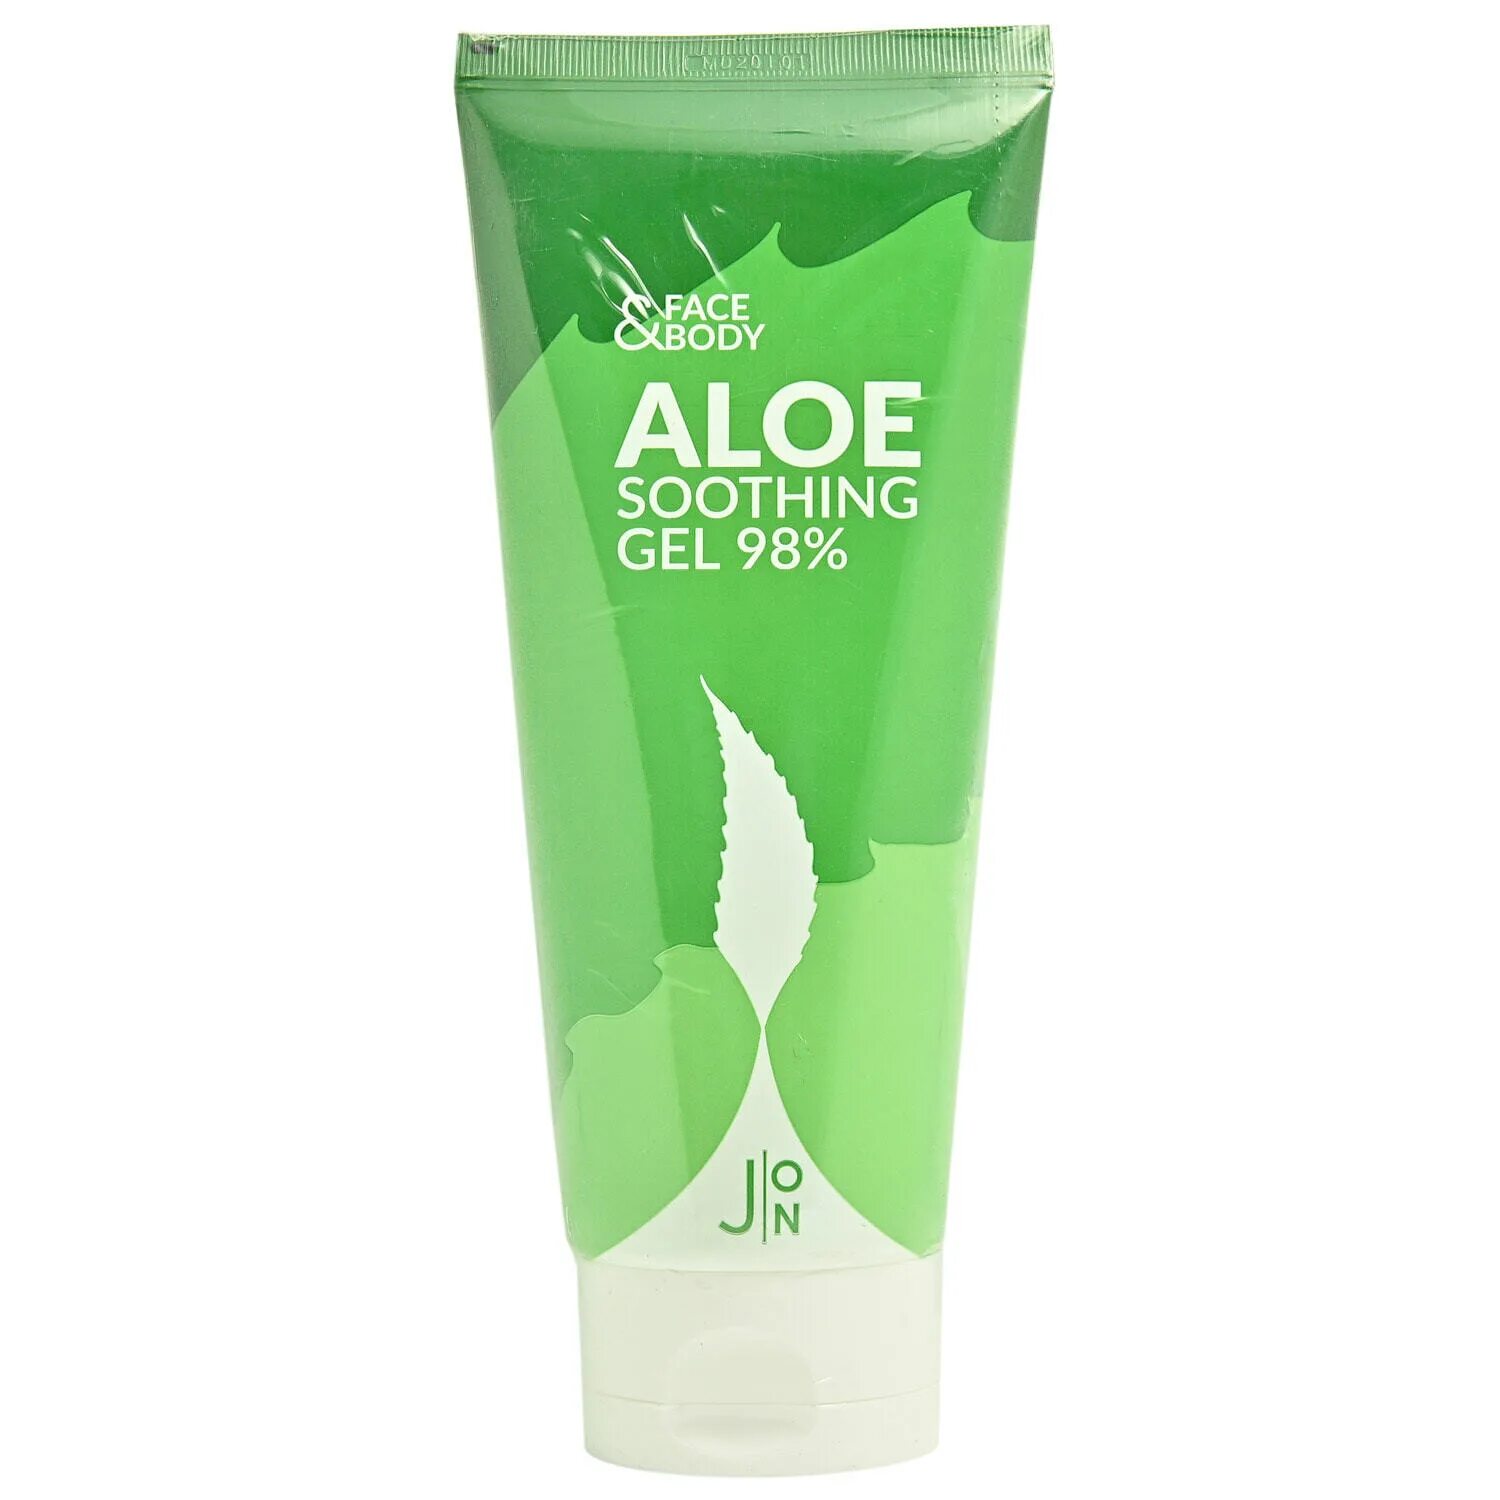 Aloe body. [J:on] гель универсальный алоэ face & body Aloe Soothing Gel 98%, 200 мл. J:on Aloe Soothing Gel 98%. [J:on] гель универсальный улитка face & body Snail Soothing Gel 98%, 200 мл. J on ель для кожи Aloe Soothing Gel 98%, 200 мл, 225 г.